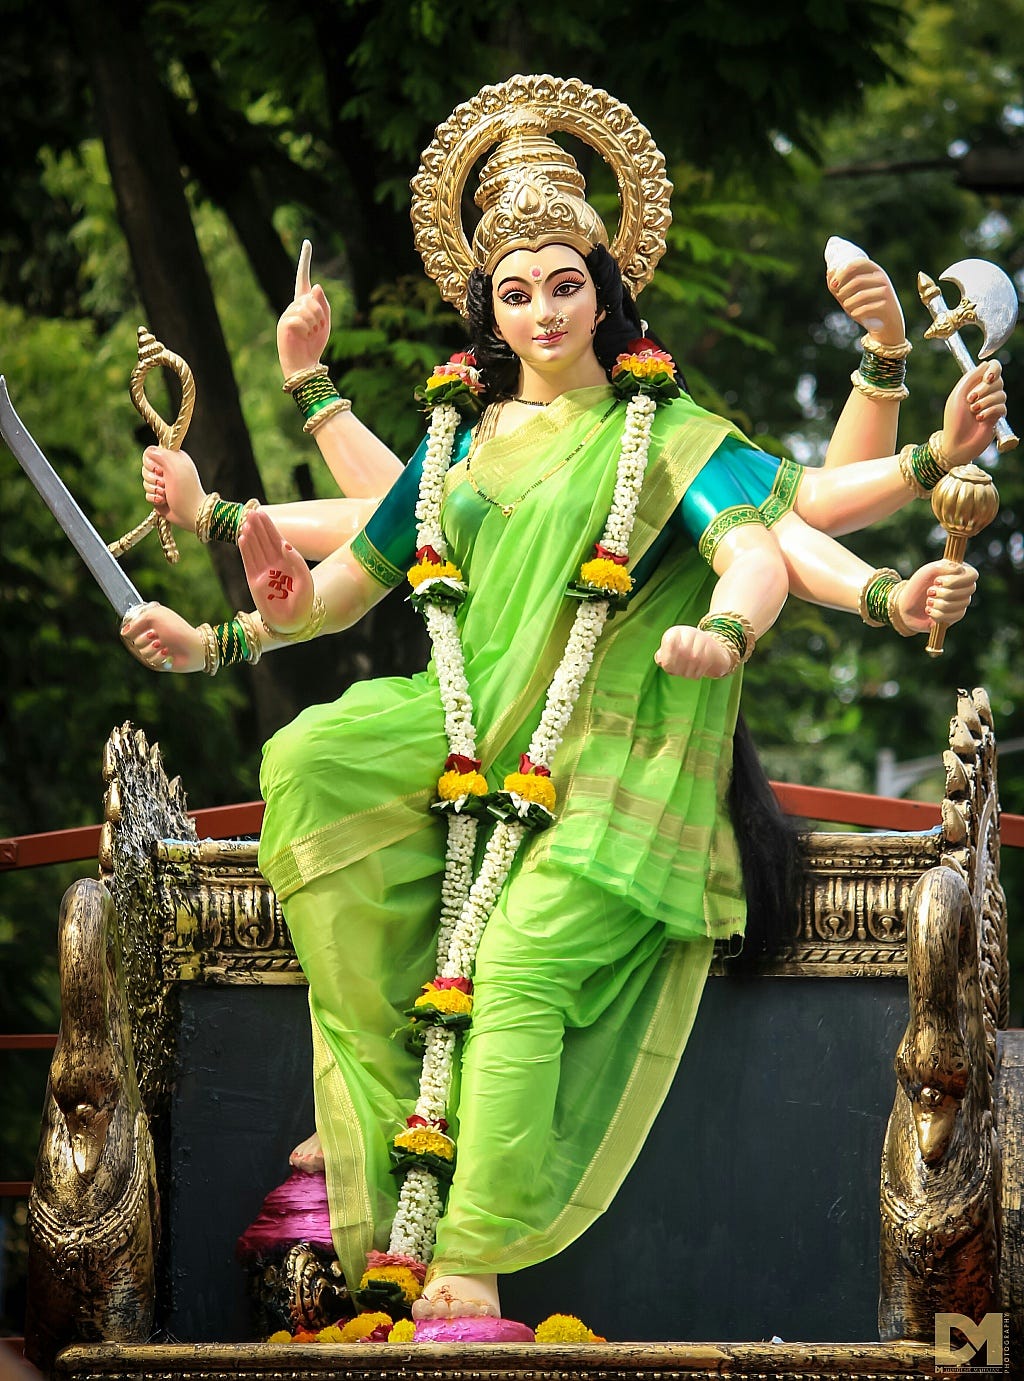 This Is How India Celebrates Navratri Durga Puja Festival By Halla Photo Contests Halla Photo Contests